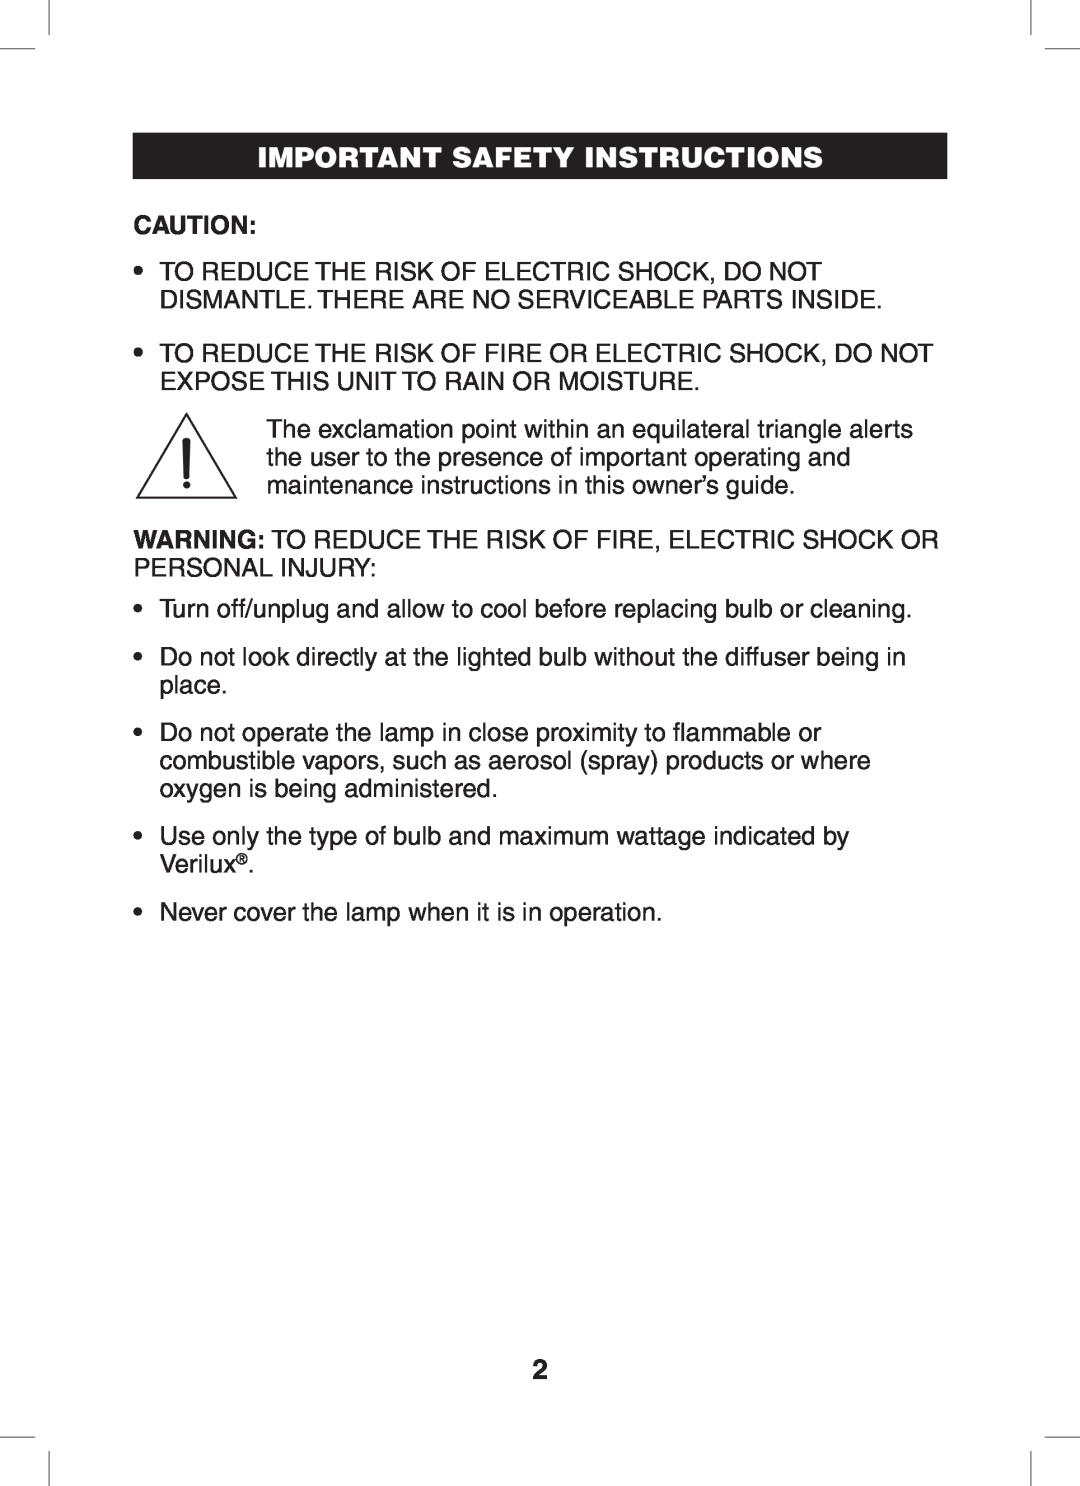 Verilux VT01 manual Important Safety Instructions 